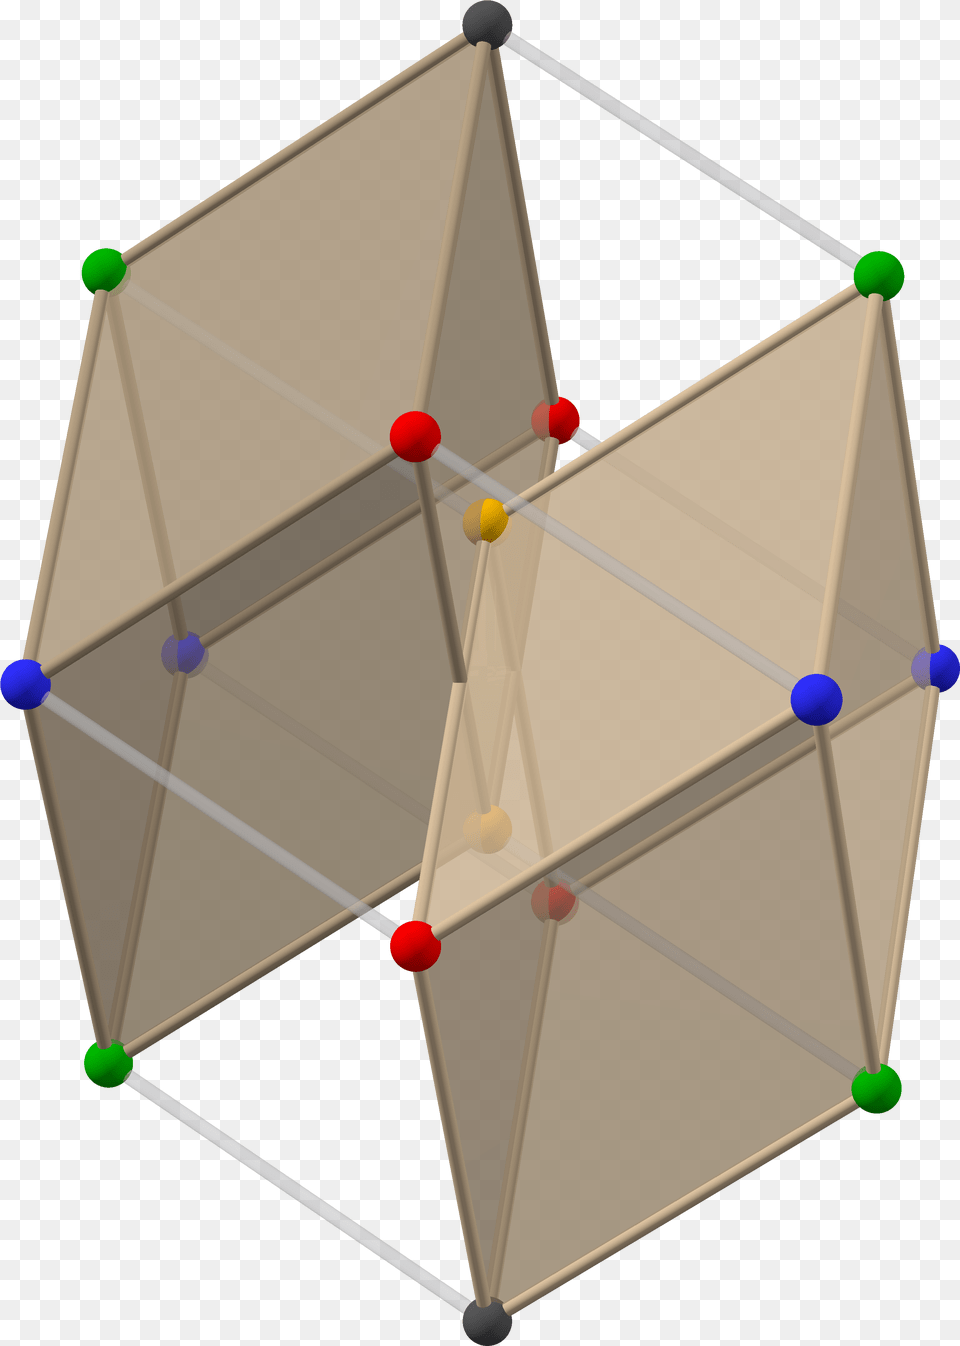 Filegolden Rhombohedra In Bilinski Dodecahedron 0 Acute Tent, Sphere, Ball, Sport, Tennis Png